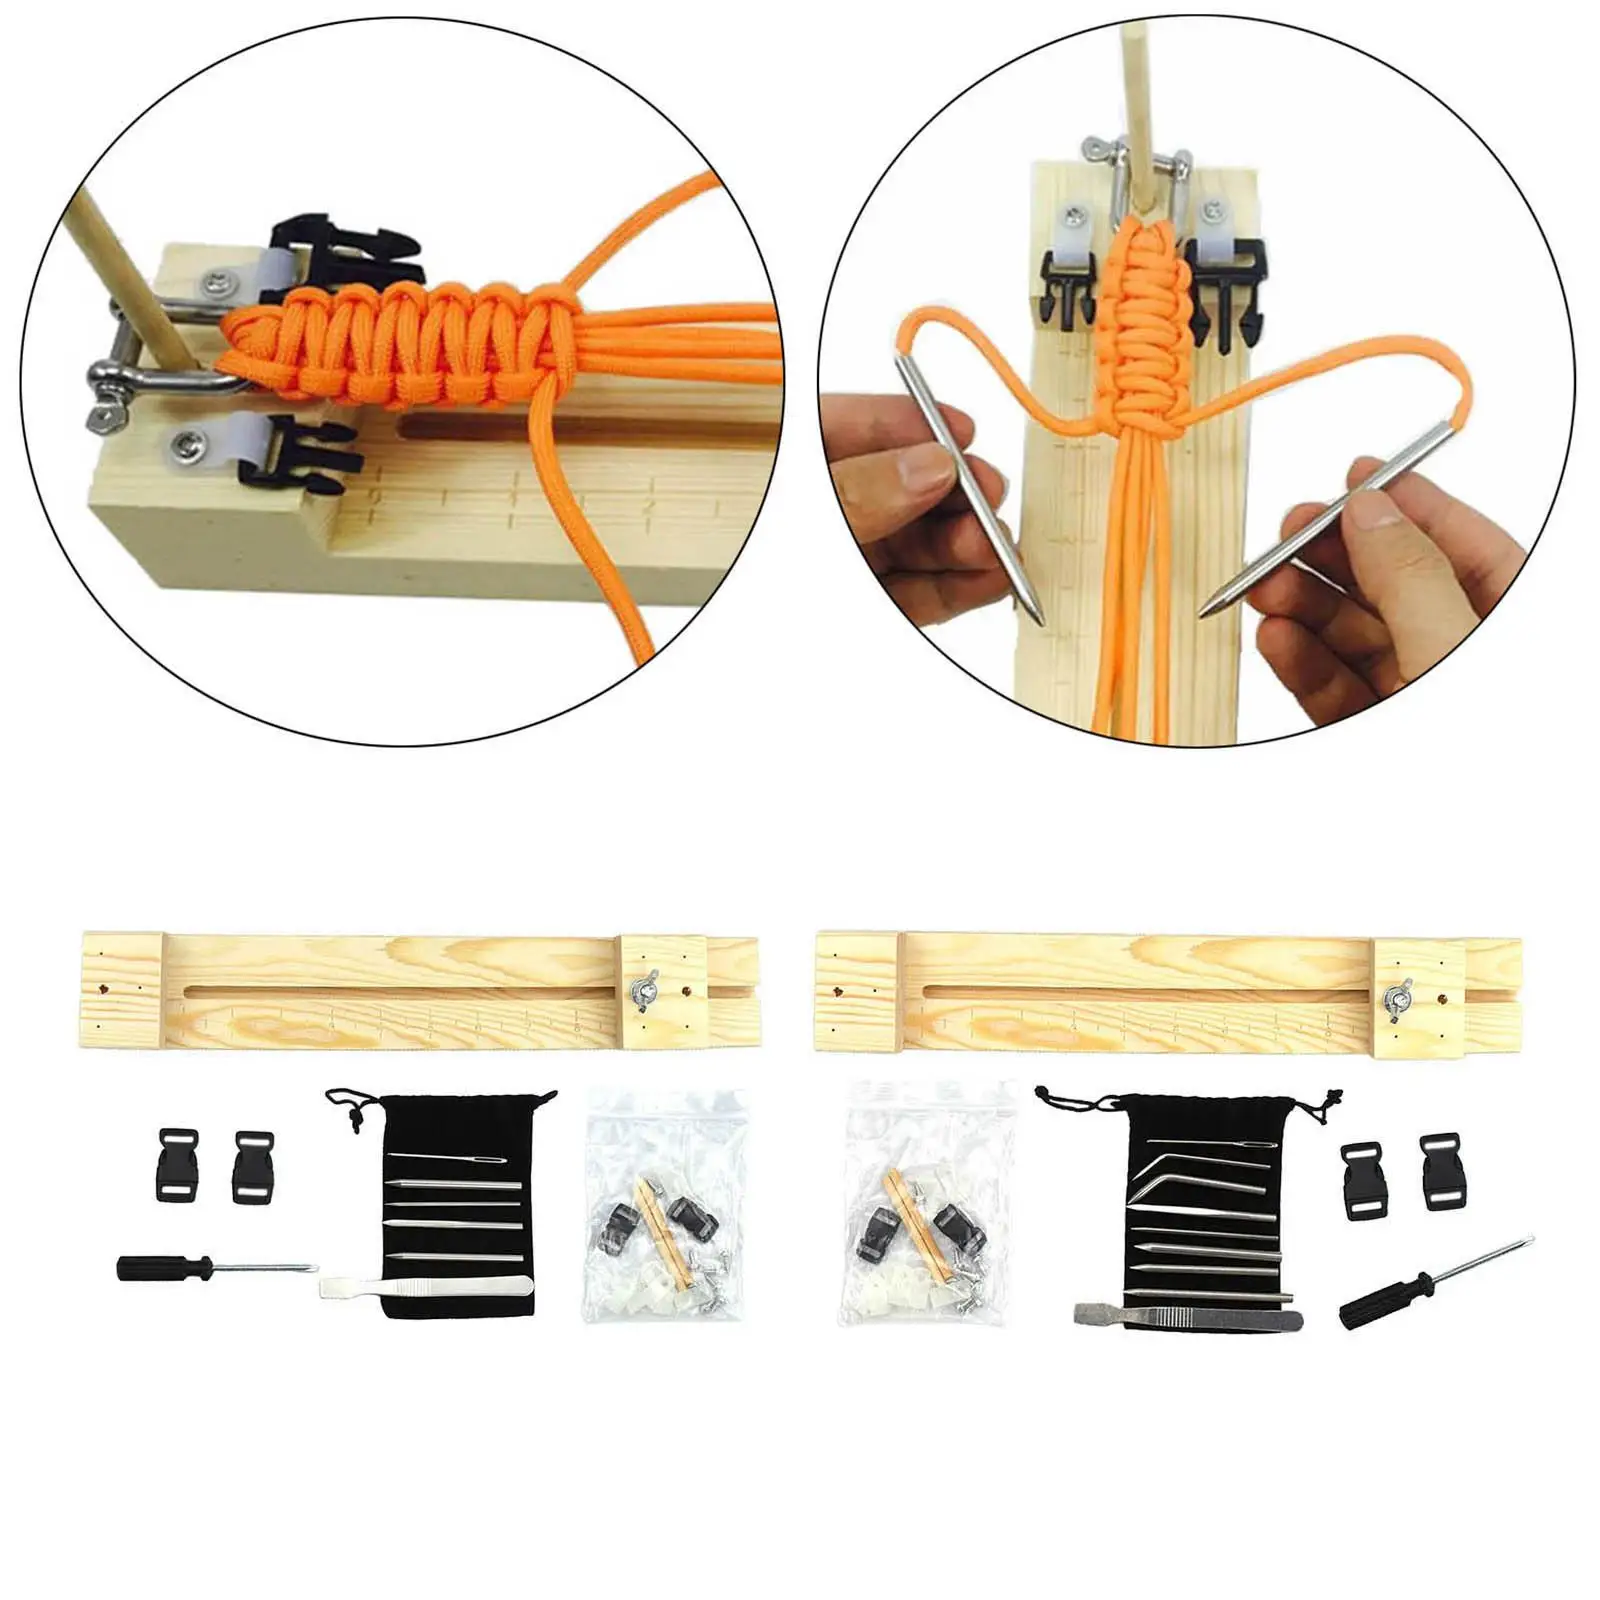 Jig Bracelet Maker Adjustable Wristband Maker Machine Parachute Cord Weaving Braiding Knitting Crafts